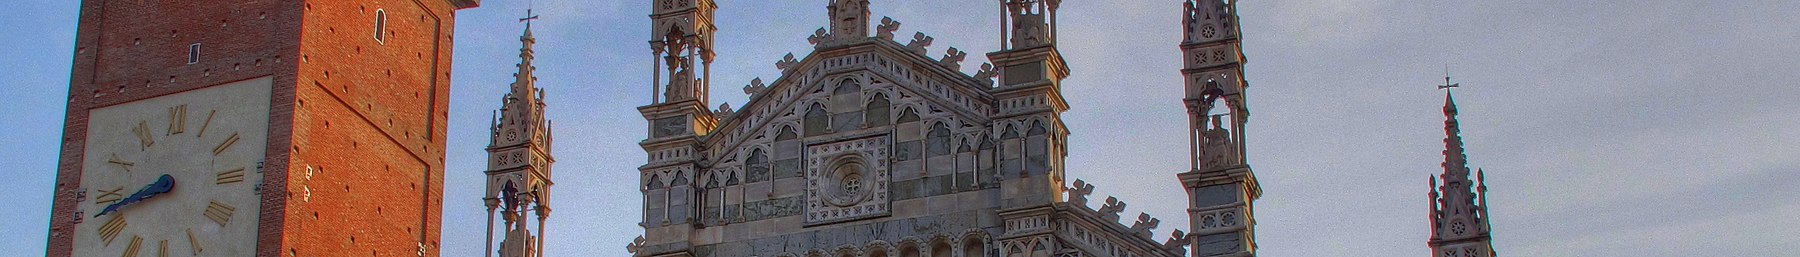 Duomo Monza italy (cropped).jpg